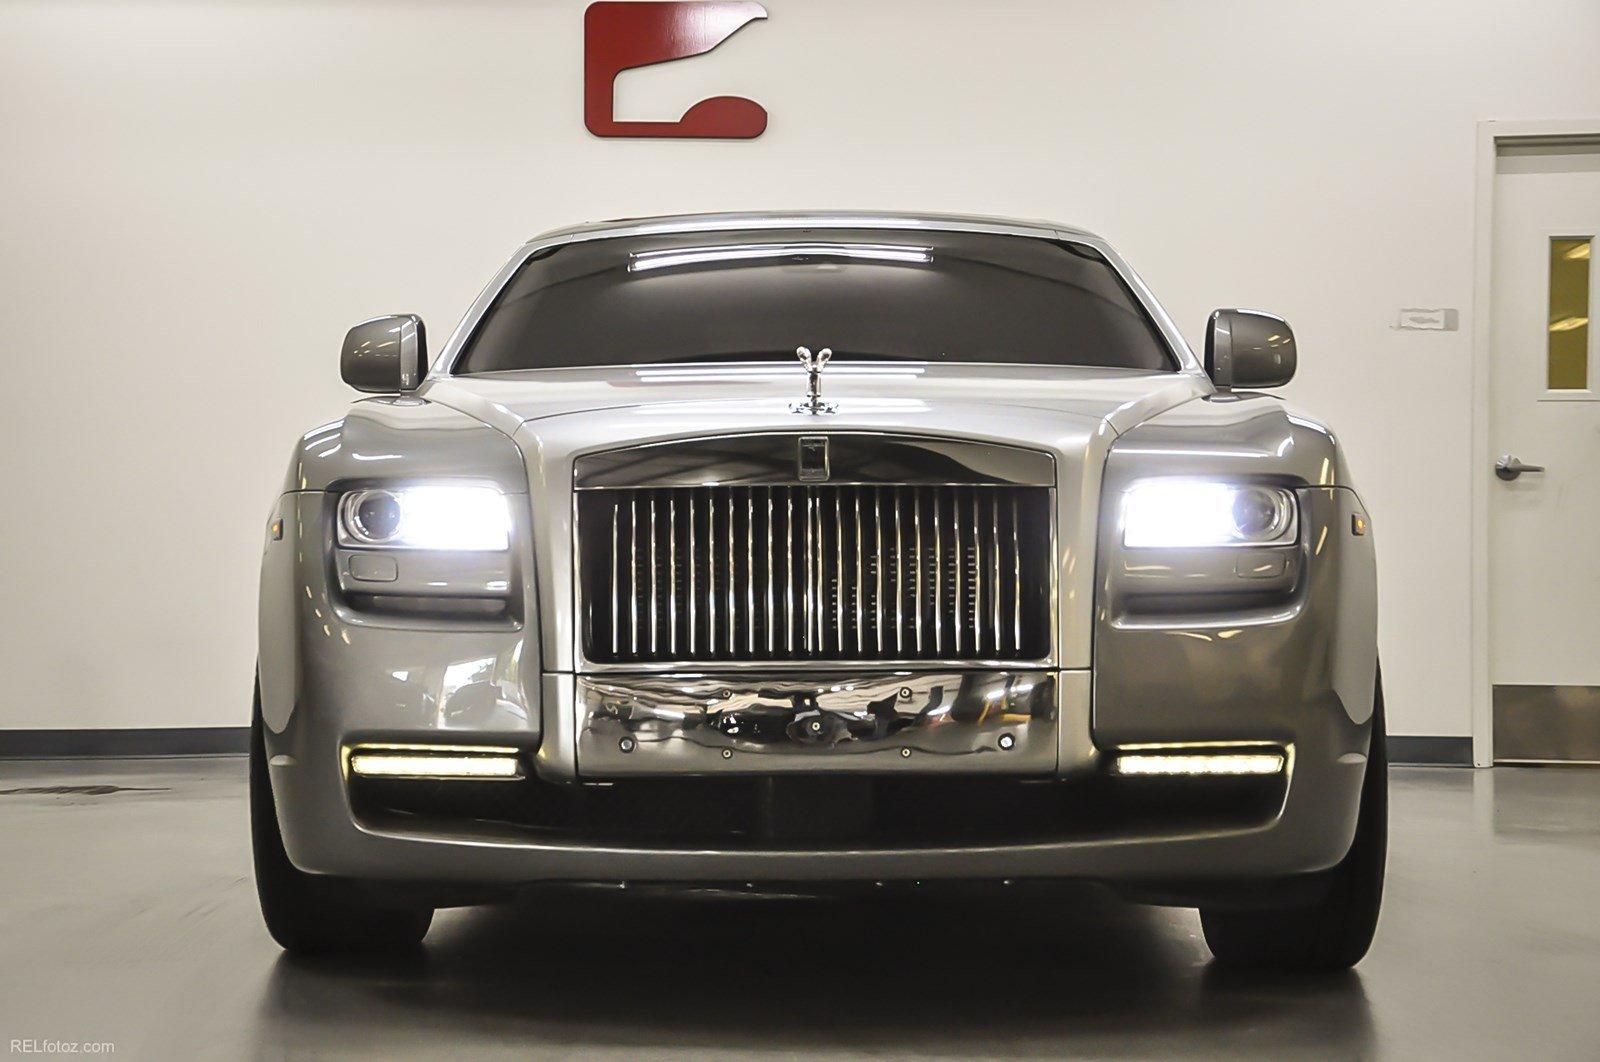 Used 2010 Rolls-Royce Ghost for sale Sold at Gravity Autos Marietta in Marietta GA 30060 3